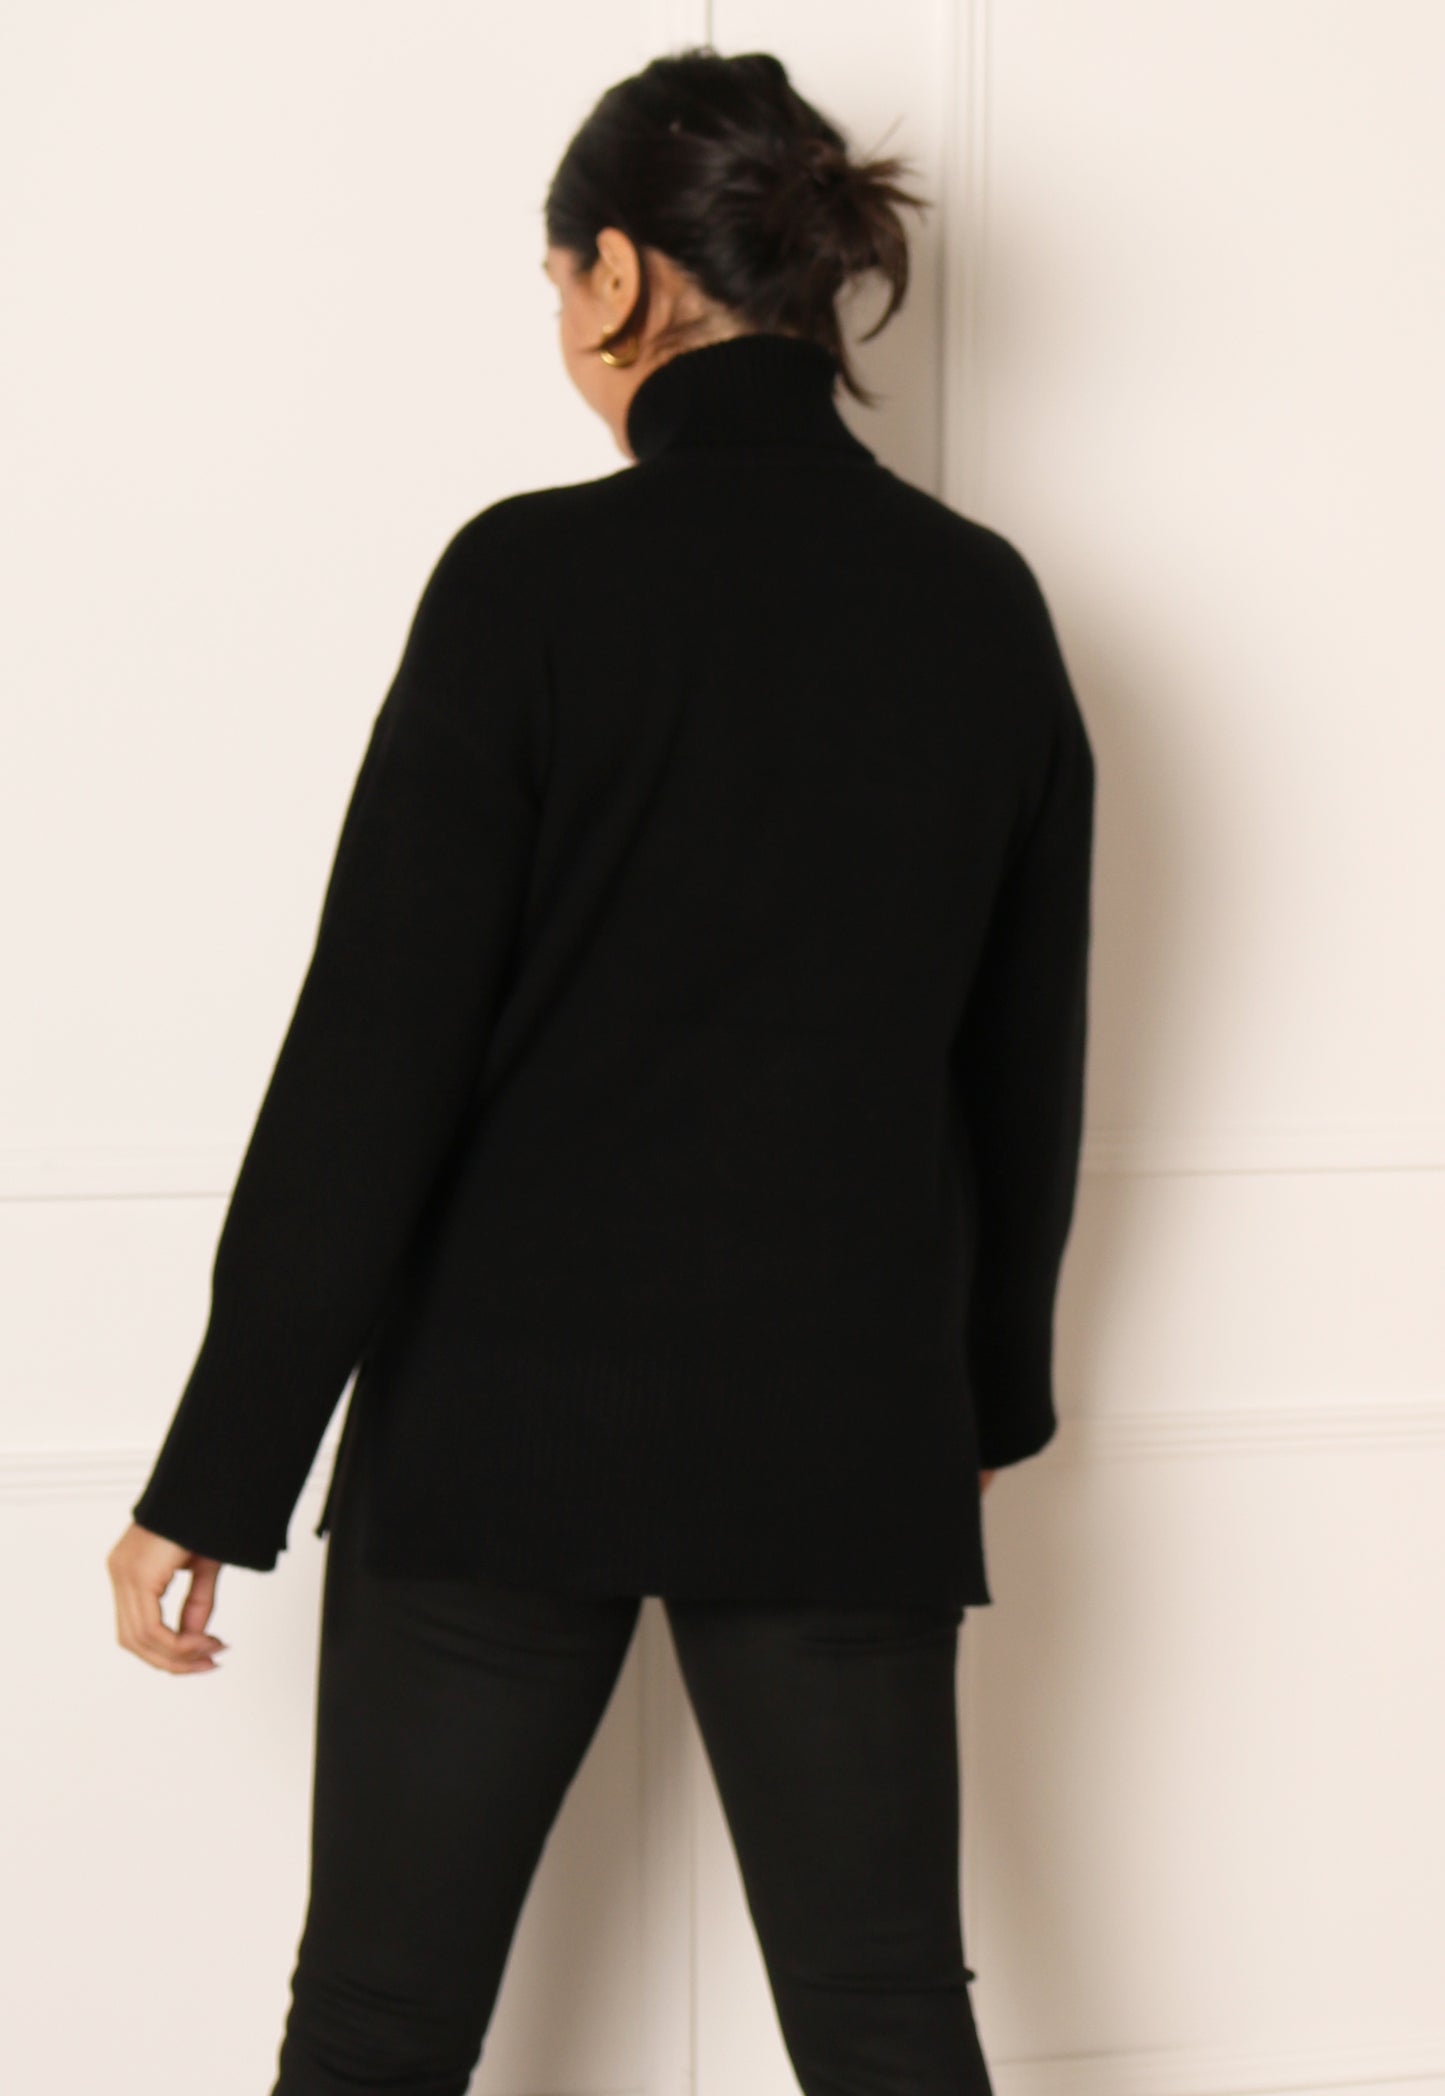 
                  
                    VERO MODA Gold Soft Knit Rollneck Longline Jumper with Side Splits in Black - One Nation Clothing
                  
                